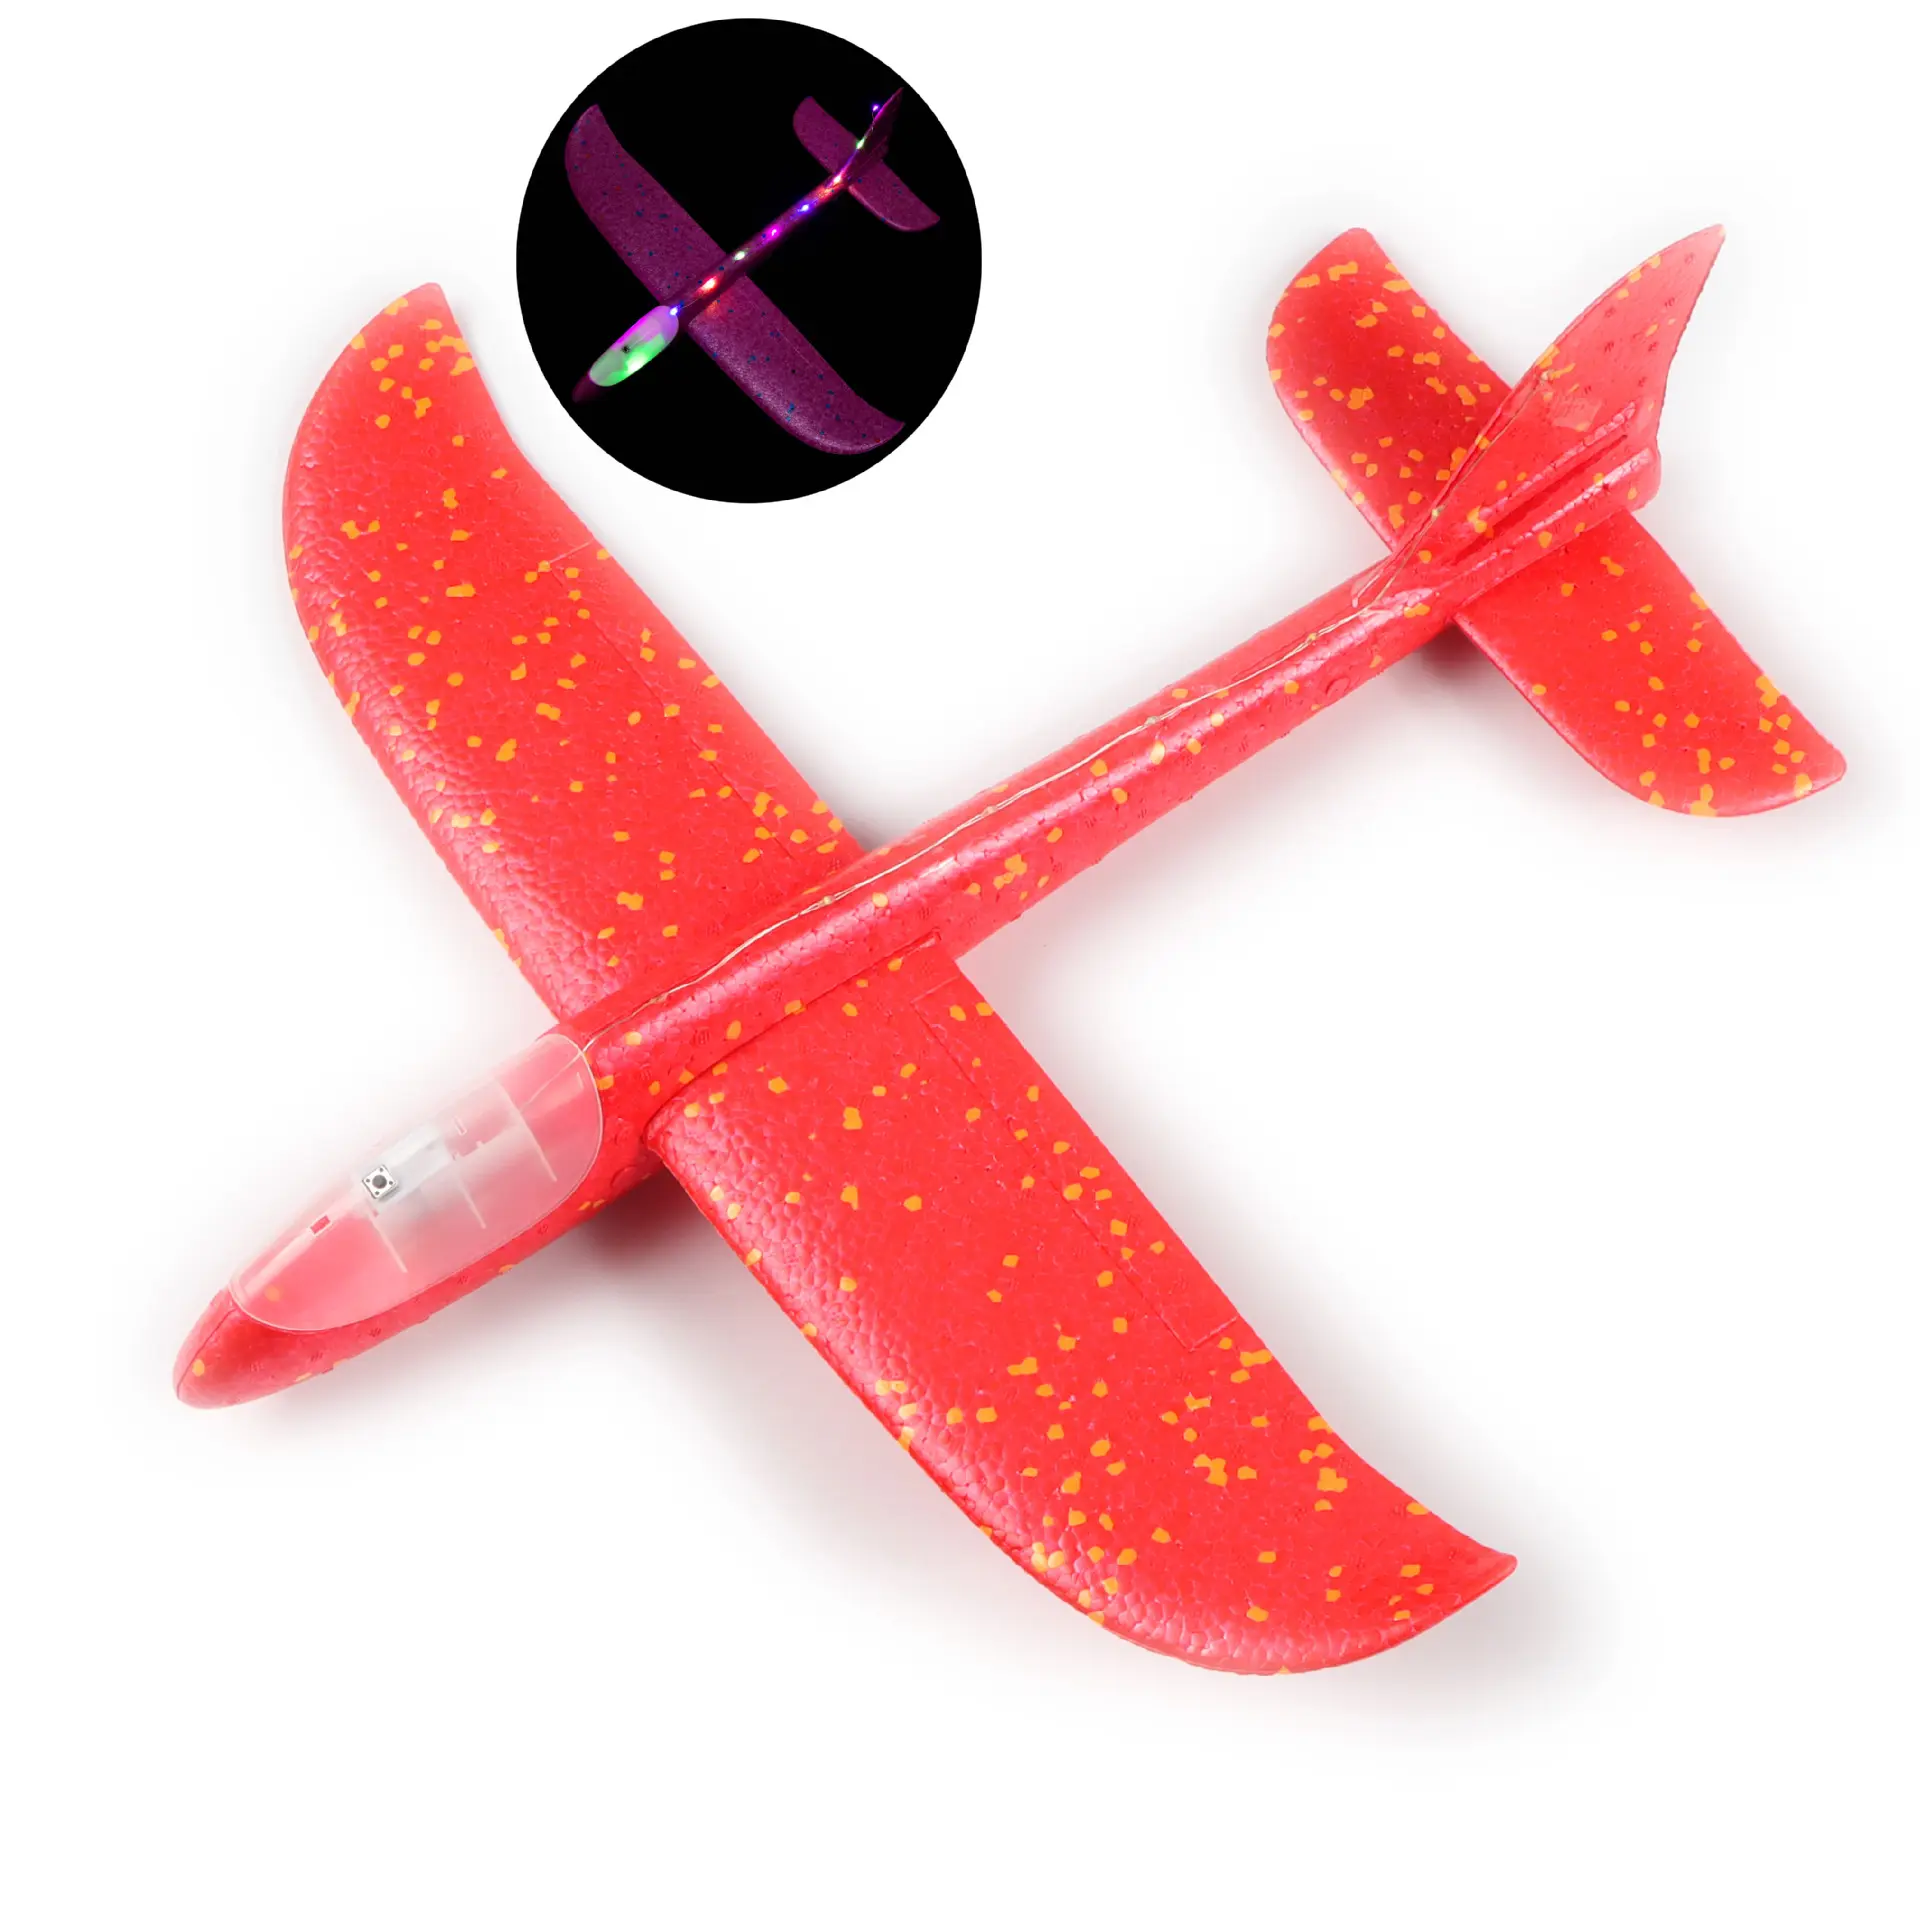 Pesawat Glider berkedip lampu led berwarna bercahaya dapat dimainkan di pesawat busa malam mainan pesawat terbaik untuk anak